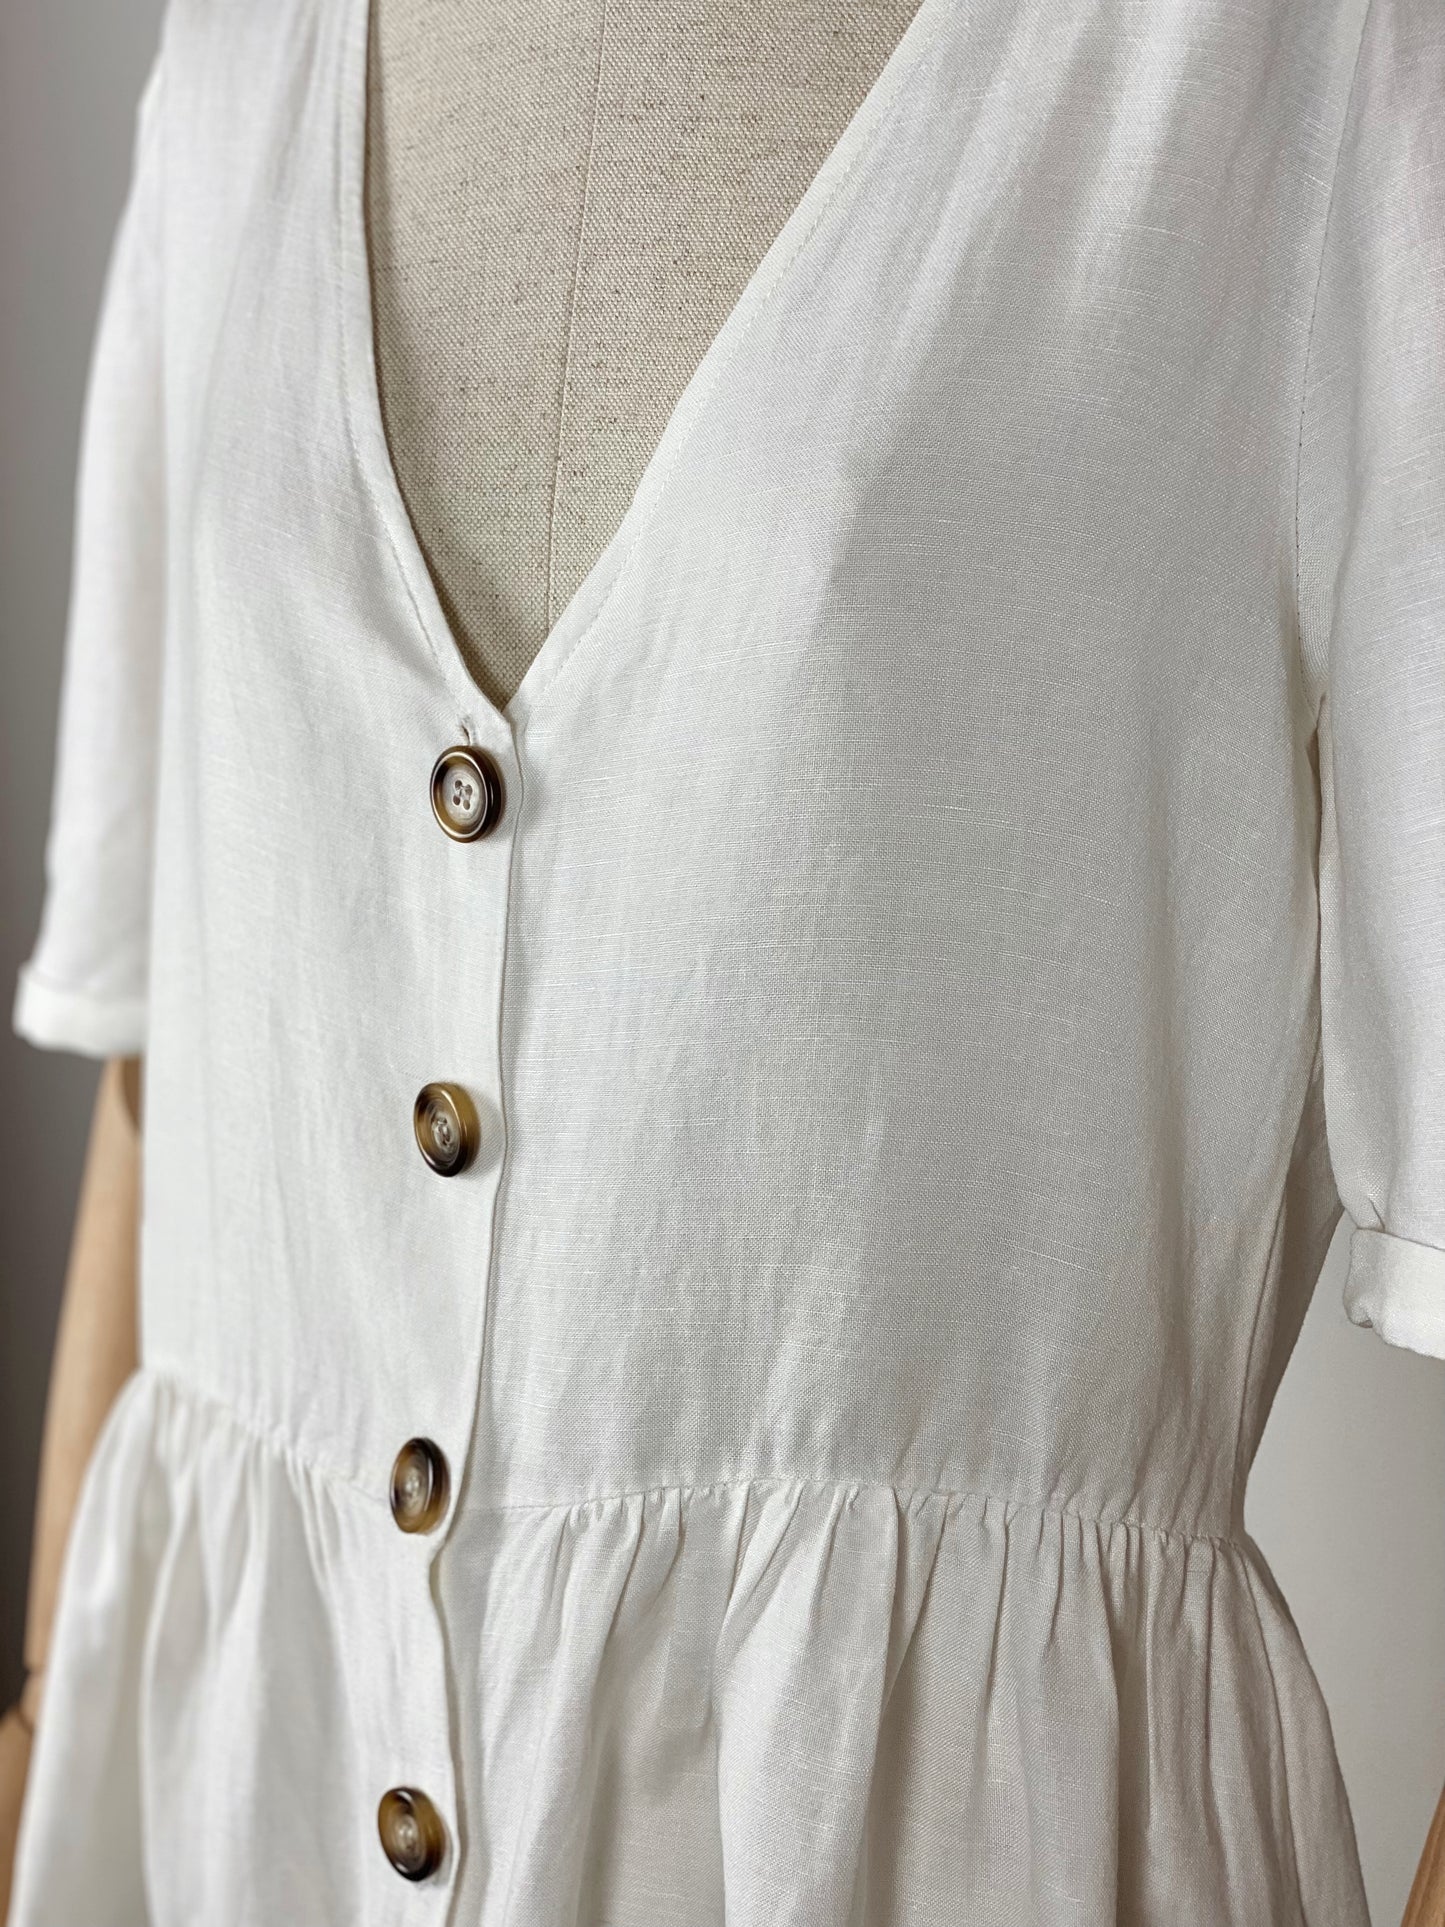 Vintage Long White Linen Dress